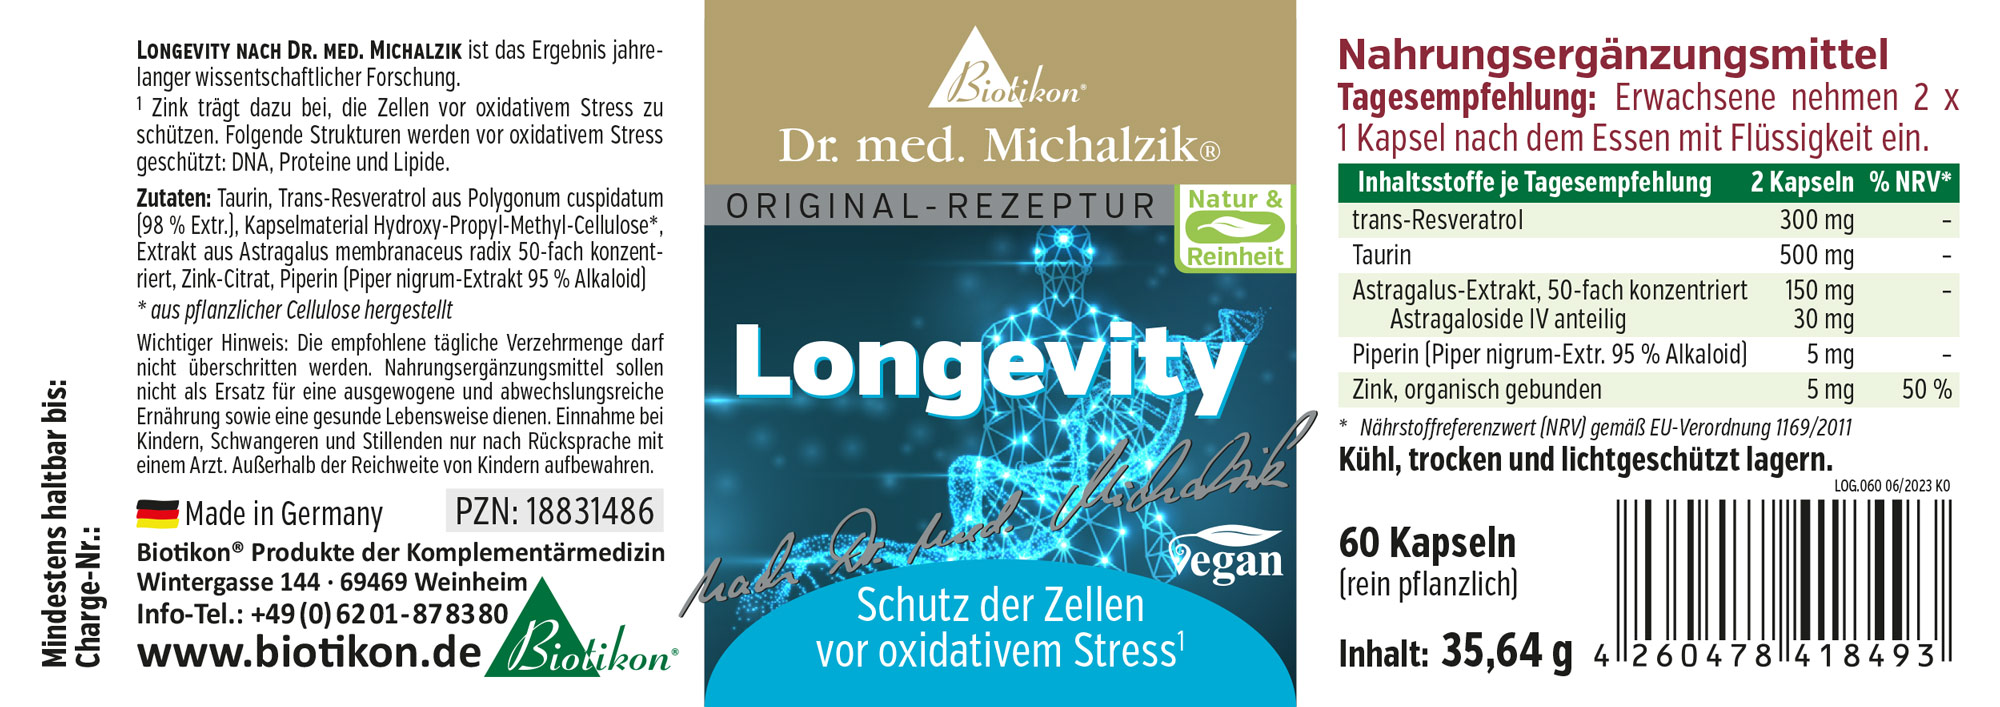 Longevity nach Dr. med. Michalzik